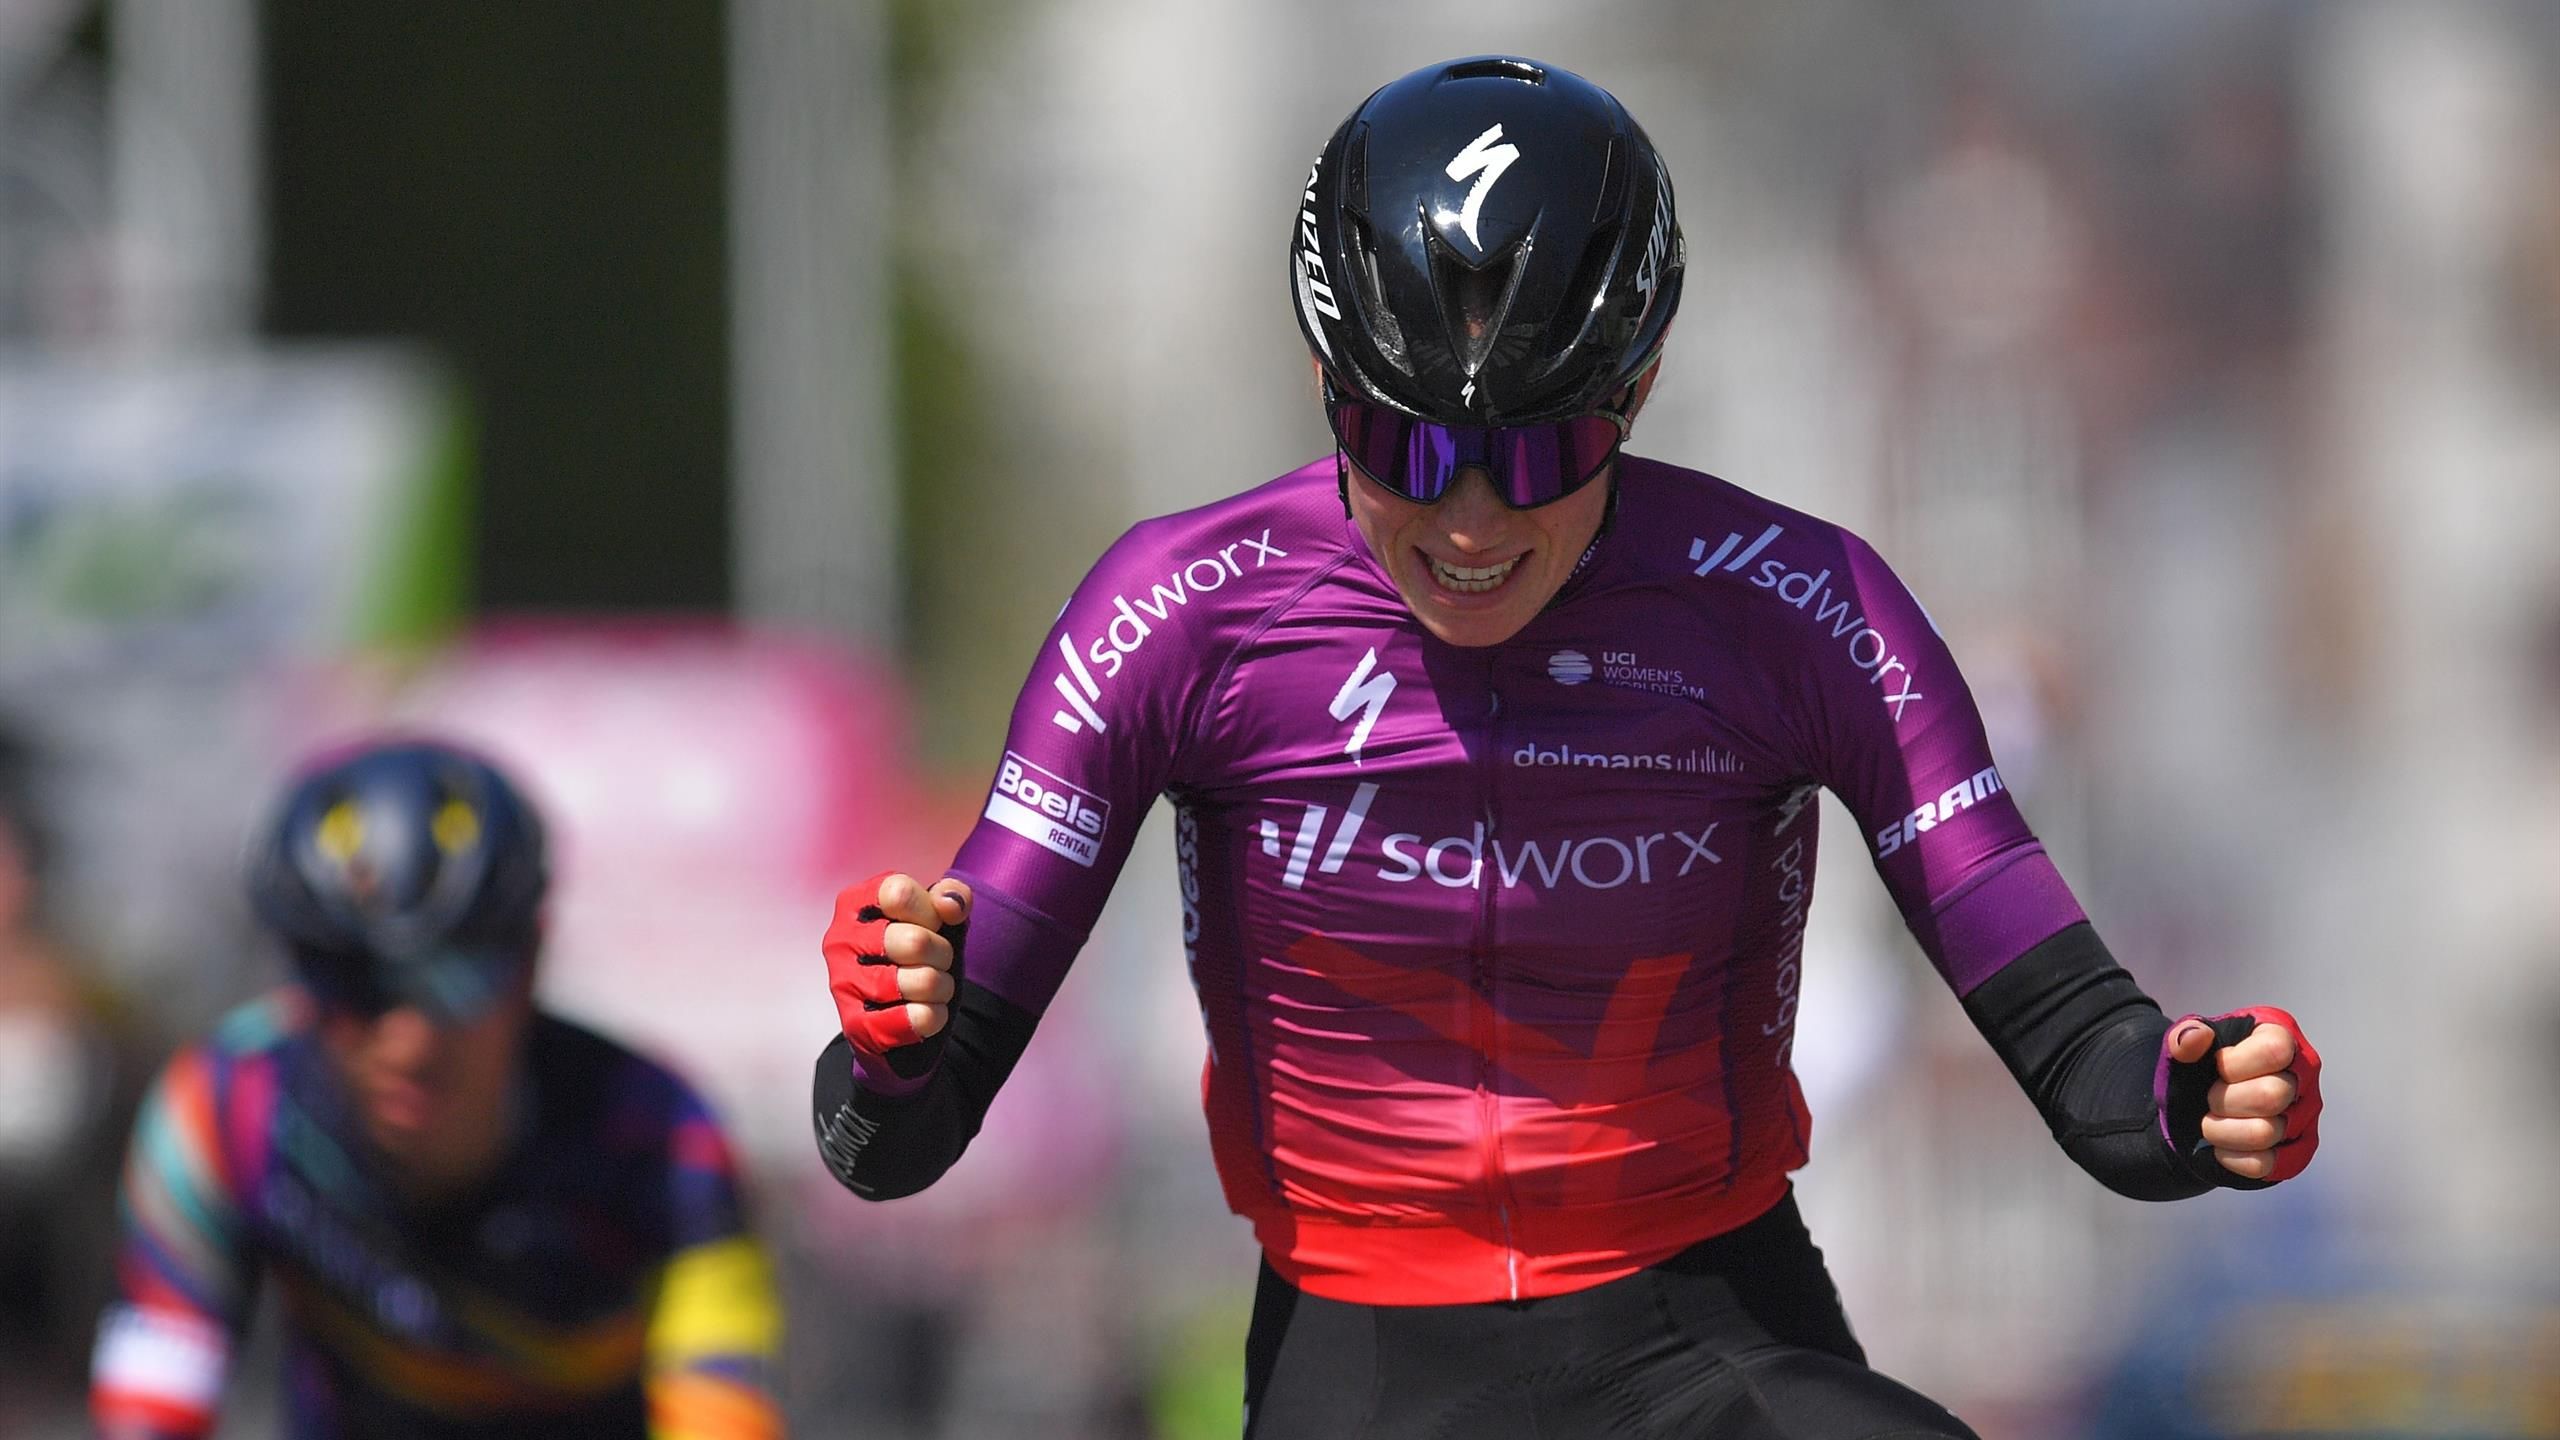 Liege–Bastogne–Liege 2021 womens race - Demi Vollerings brilliant victory as it happened